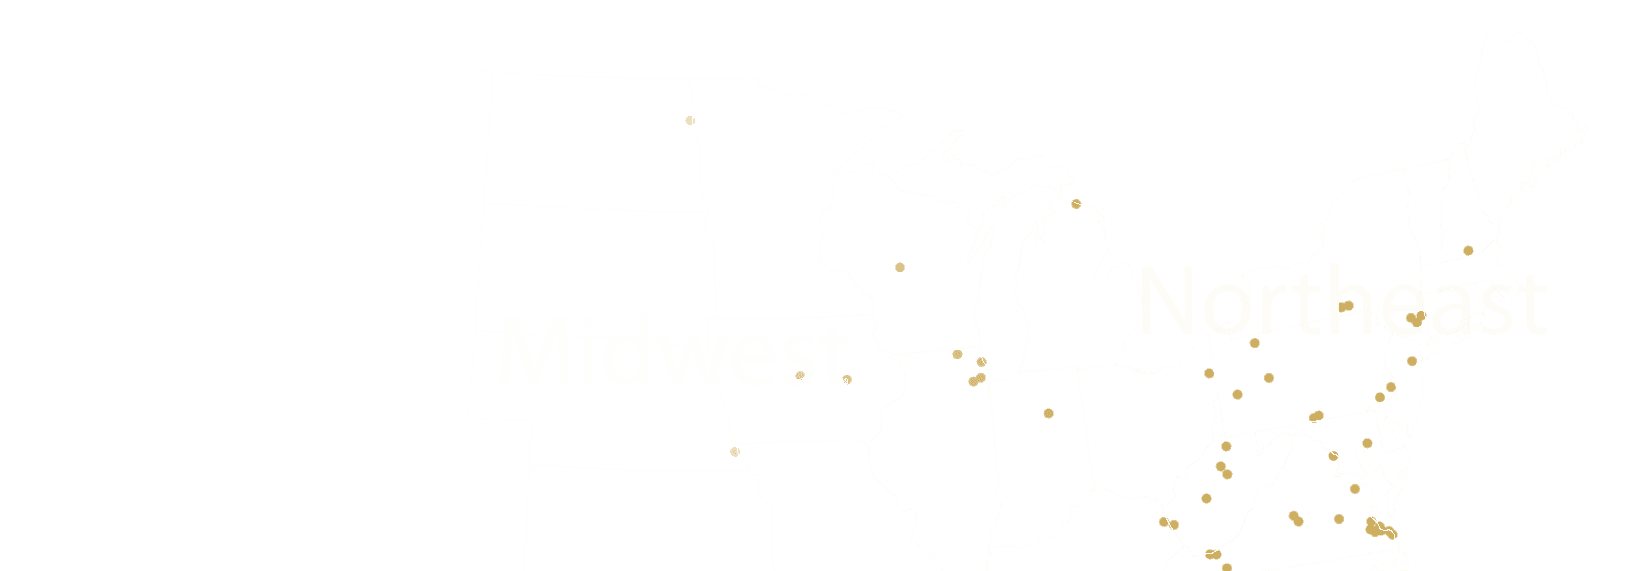 Northeast US Map